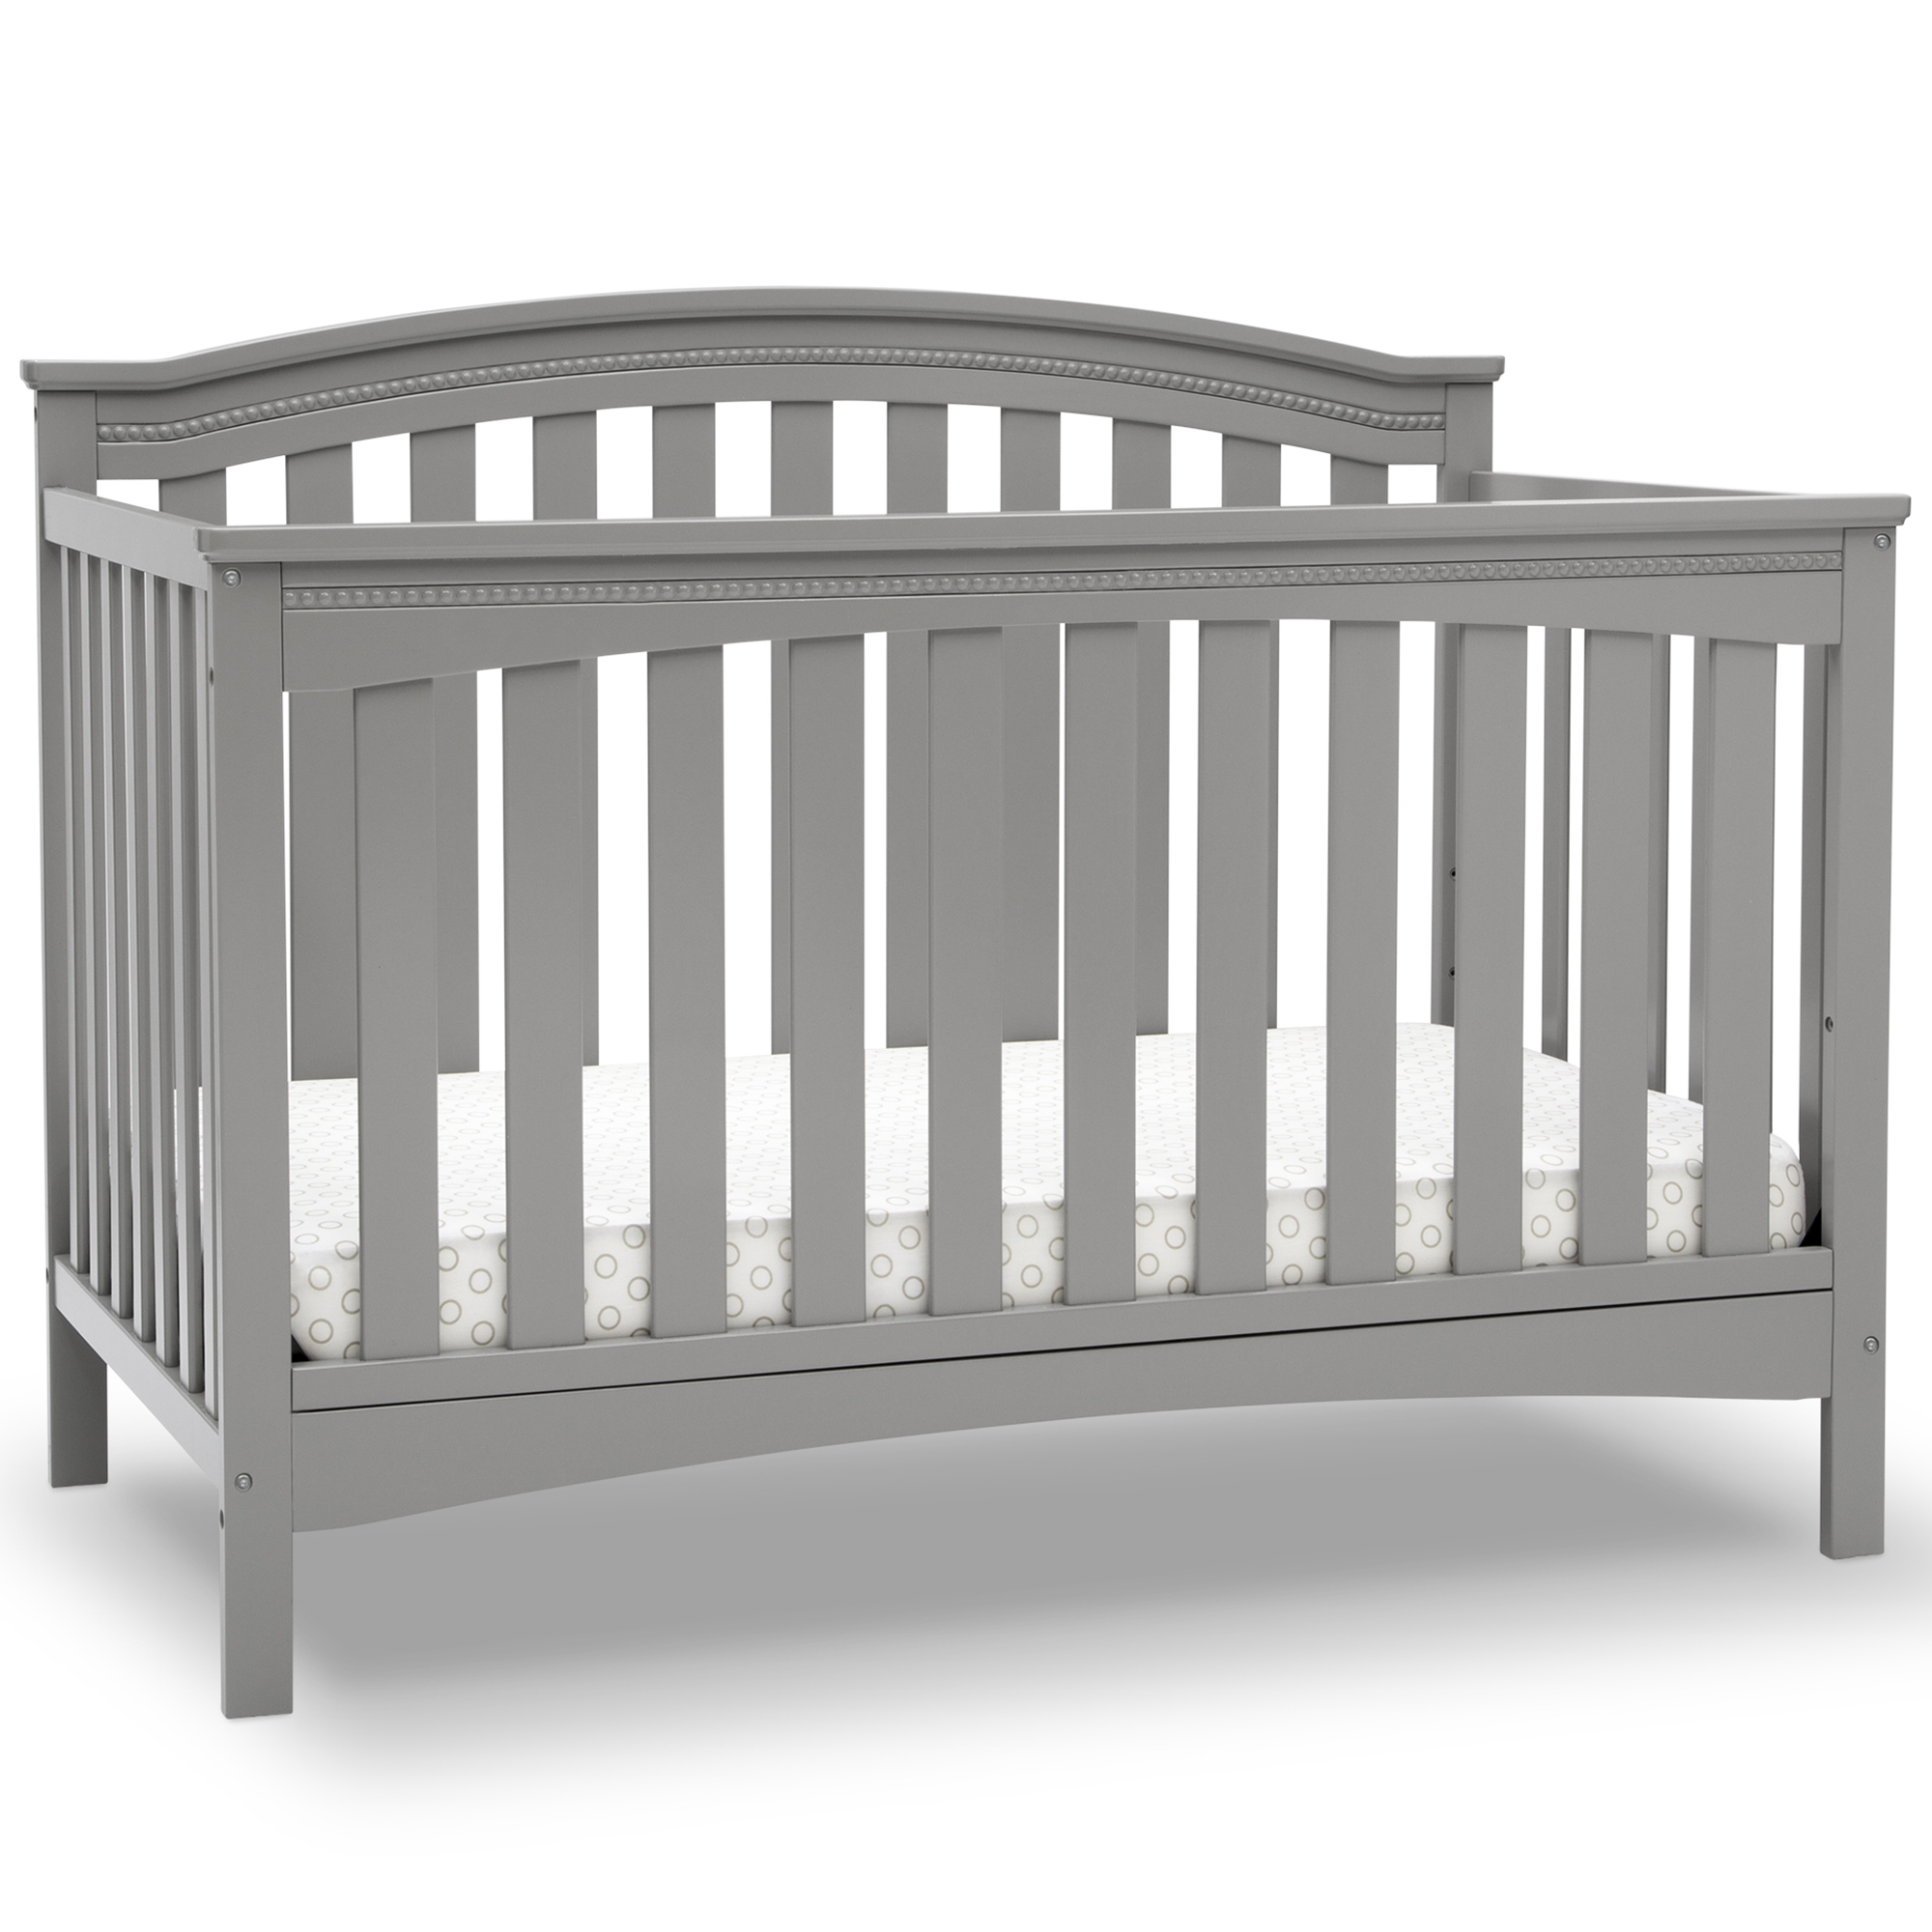 Delta Children Waverly 6-in-1 Convertible Baby Crib, Grey - image 1 of 14